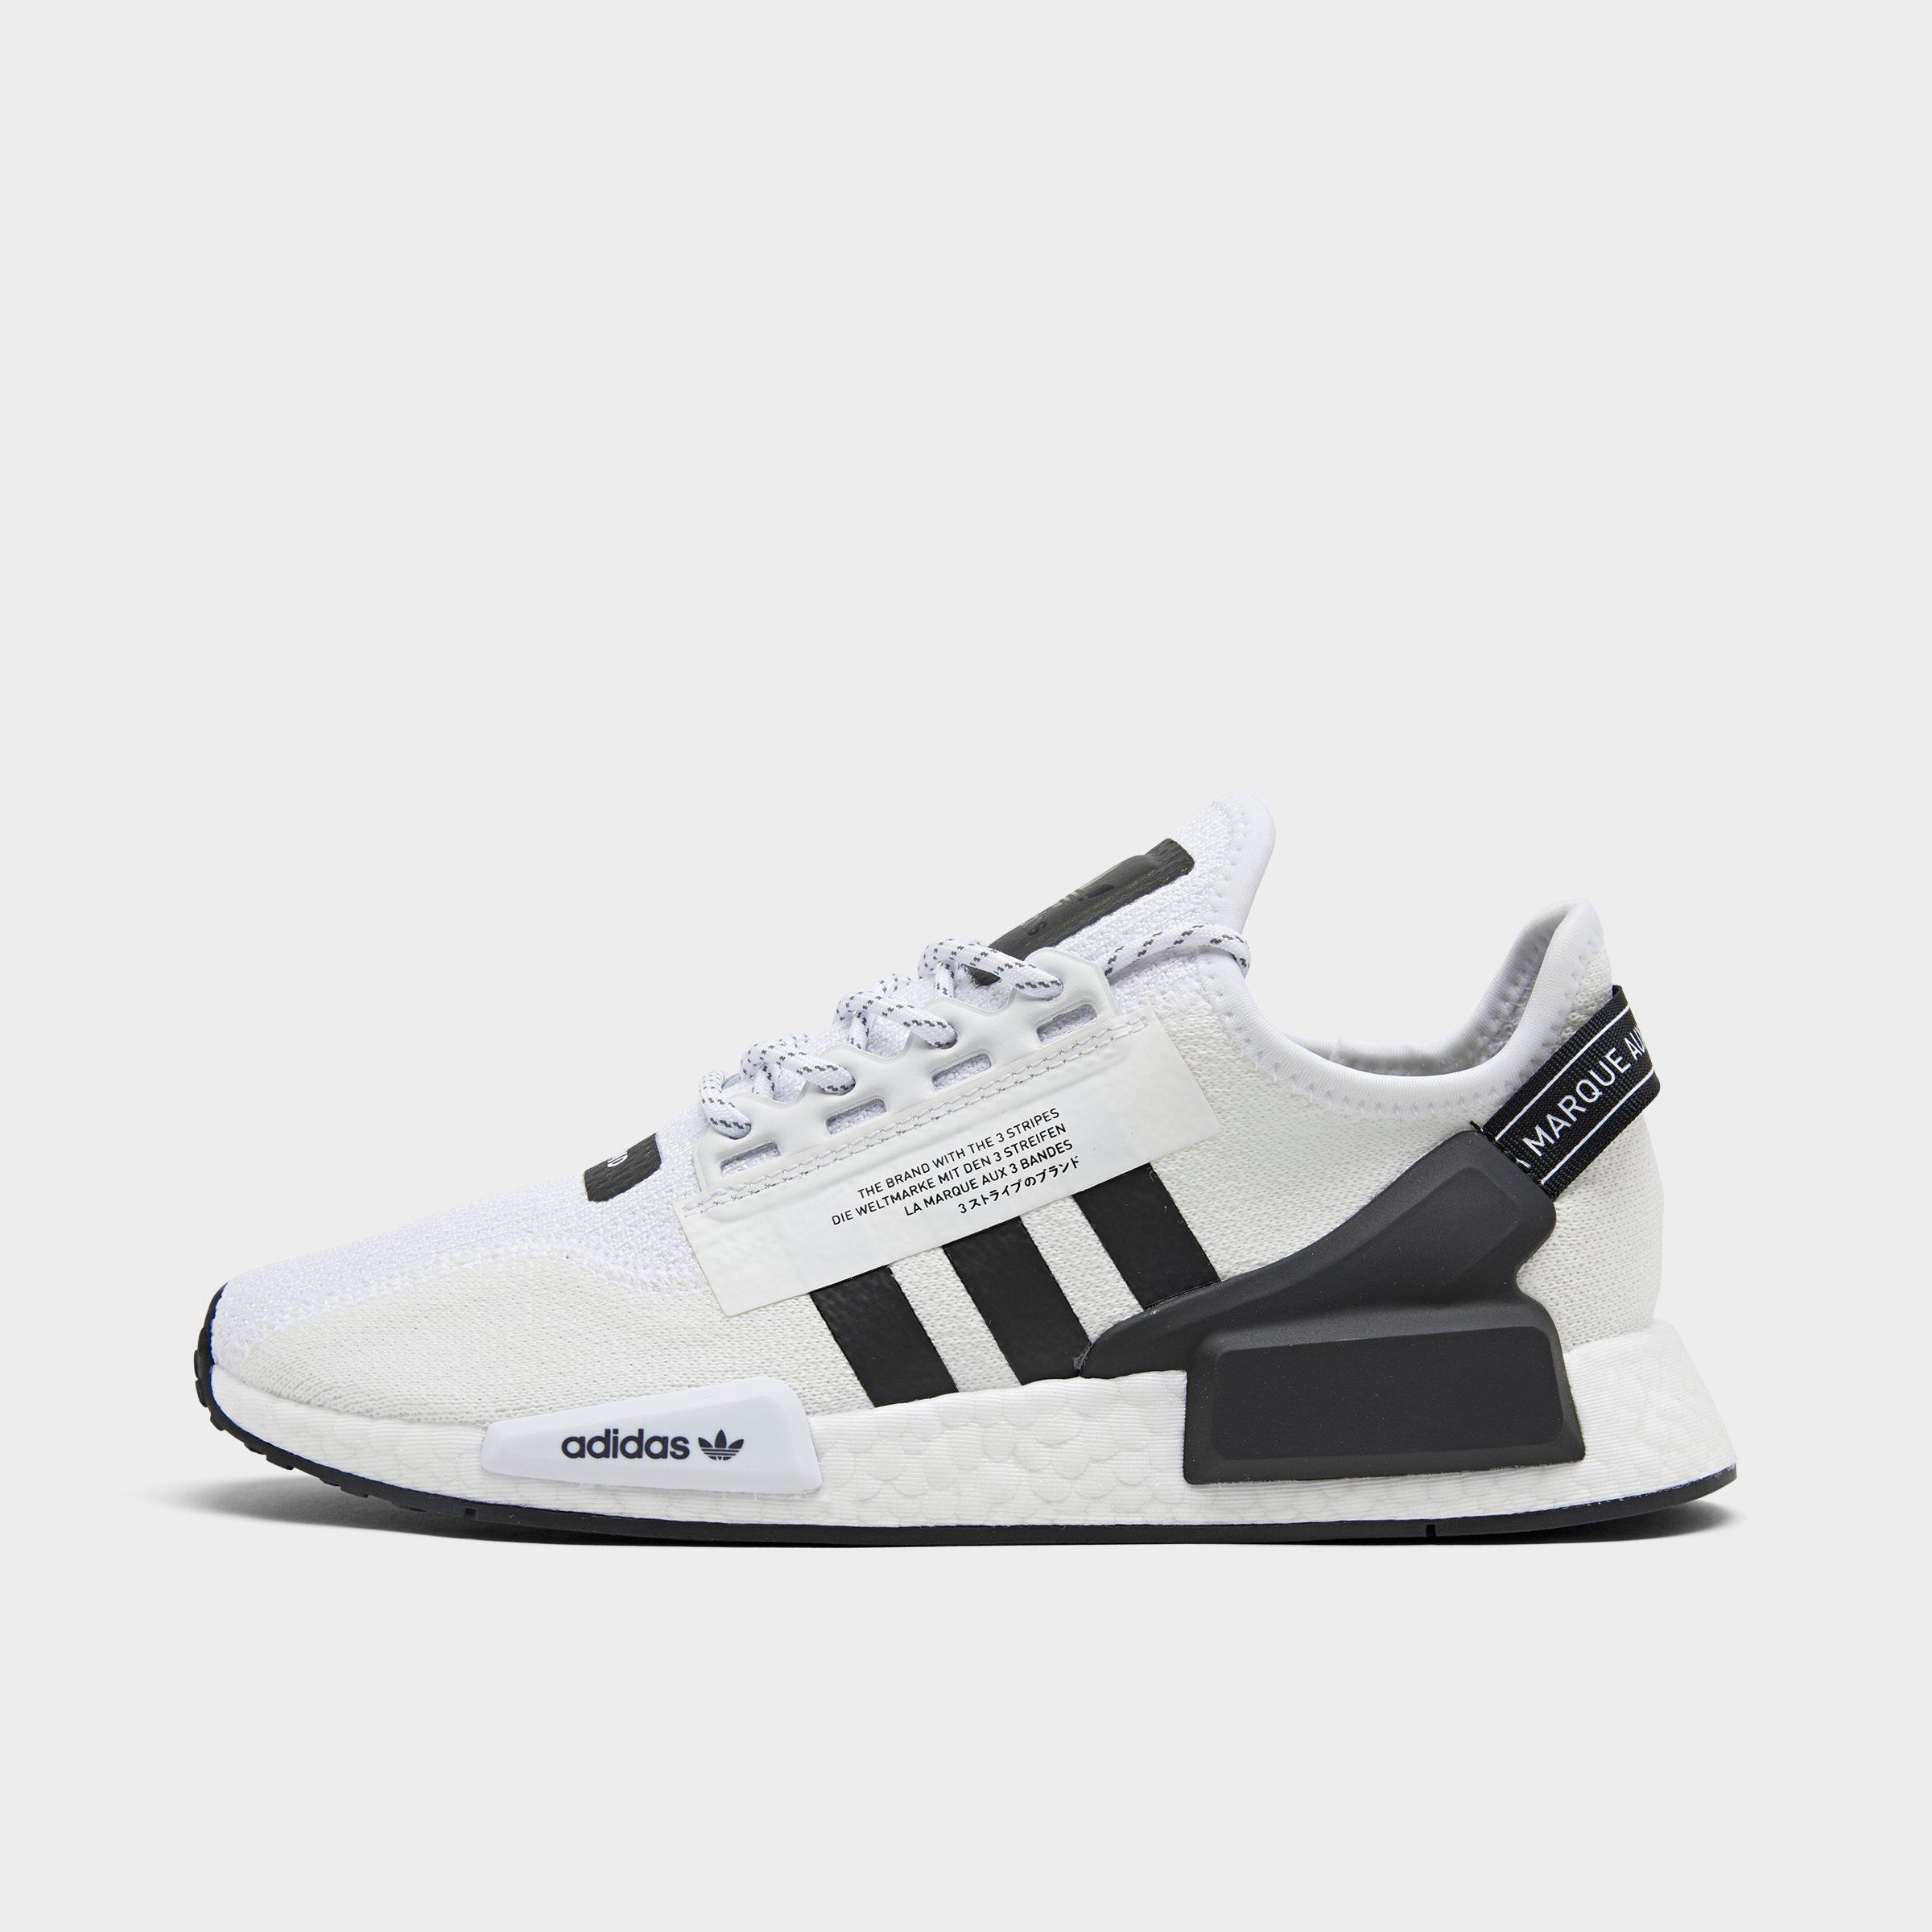 Adidas Mens 14 Originals NMD R1 Running Shoes on eBay